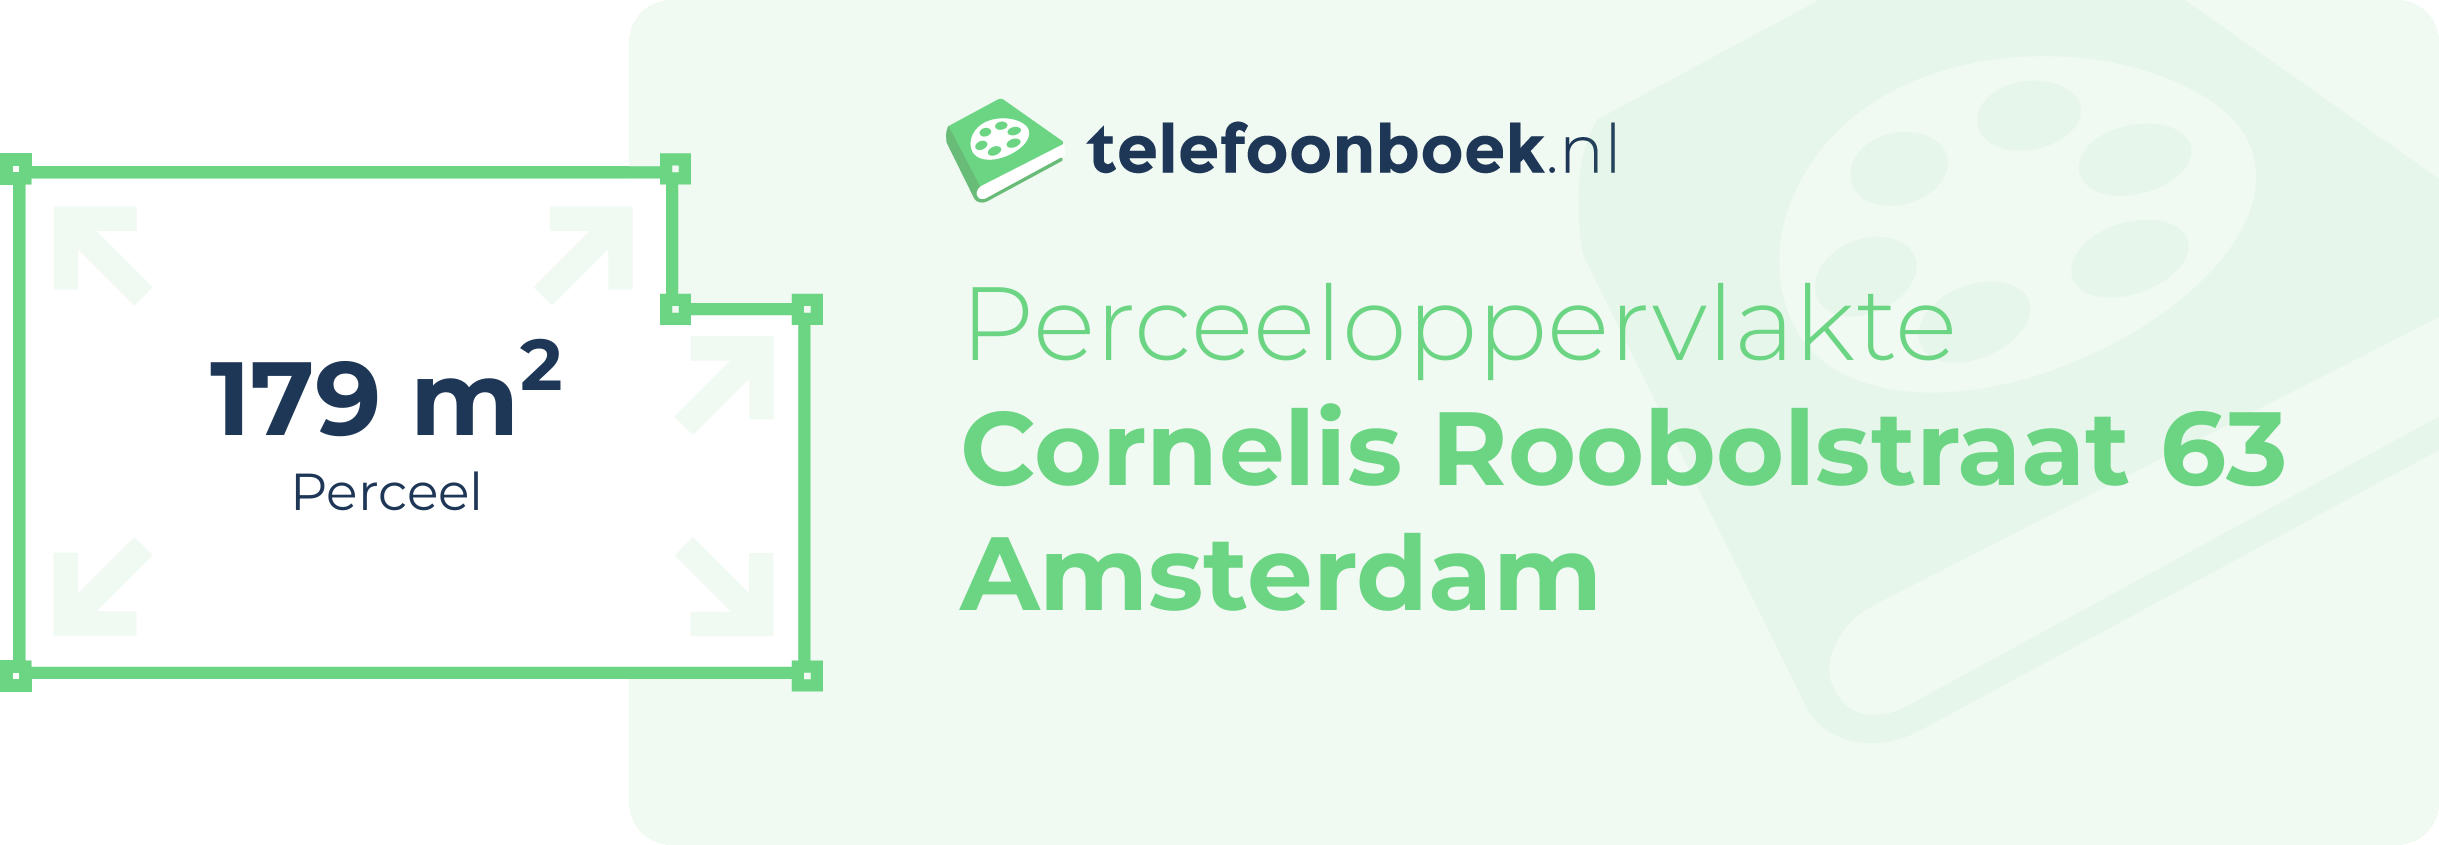 Perceeloppervlakte Cornelis Roobolstraat 63 Amsterdam